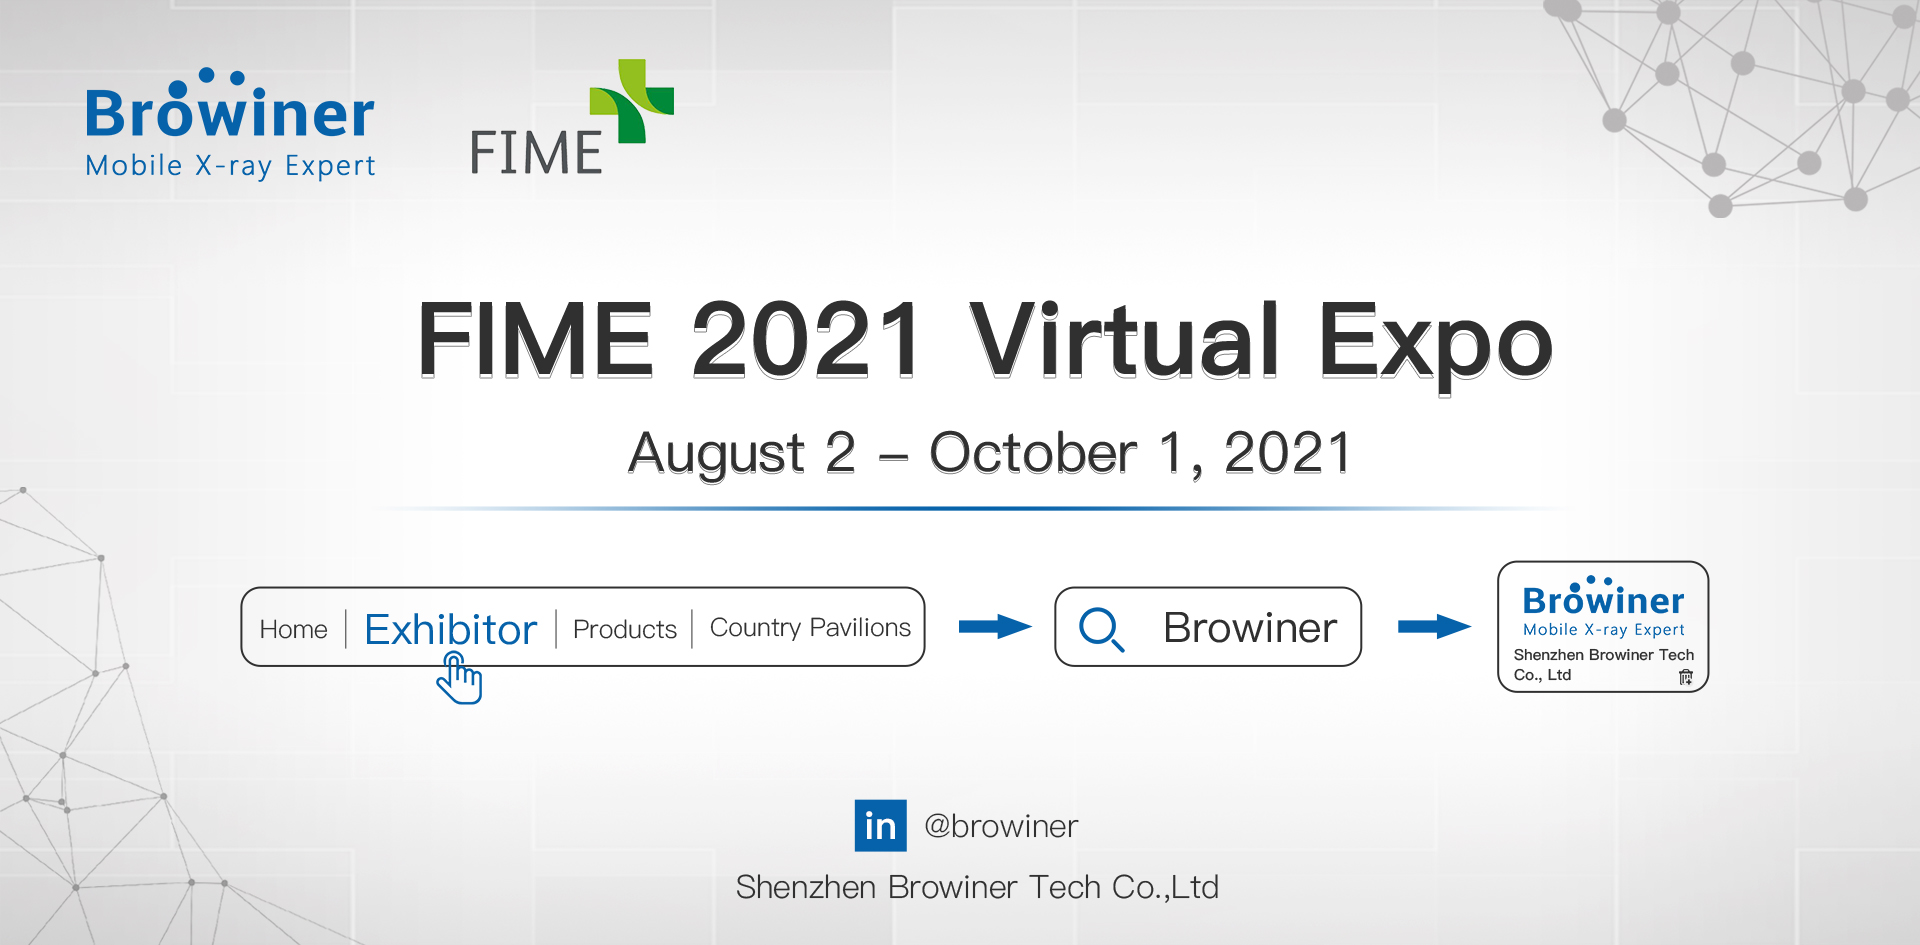 FIME 2021 Virtual Expo,Mobile X ray,Browiner